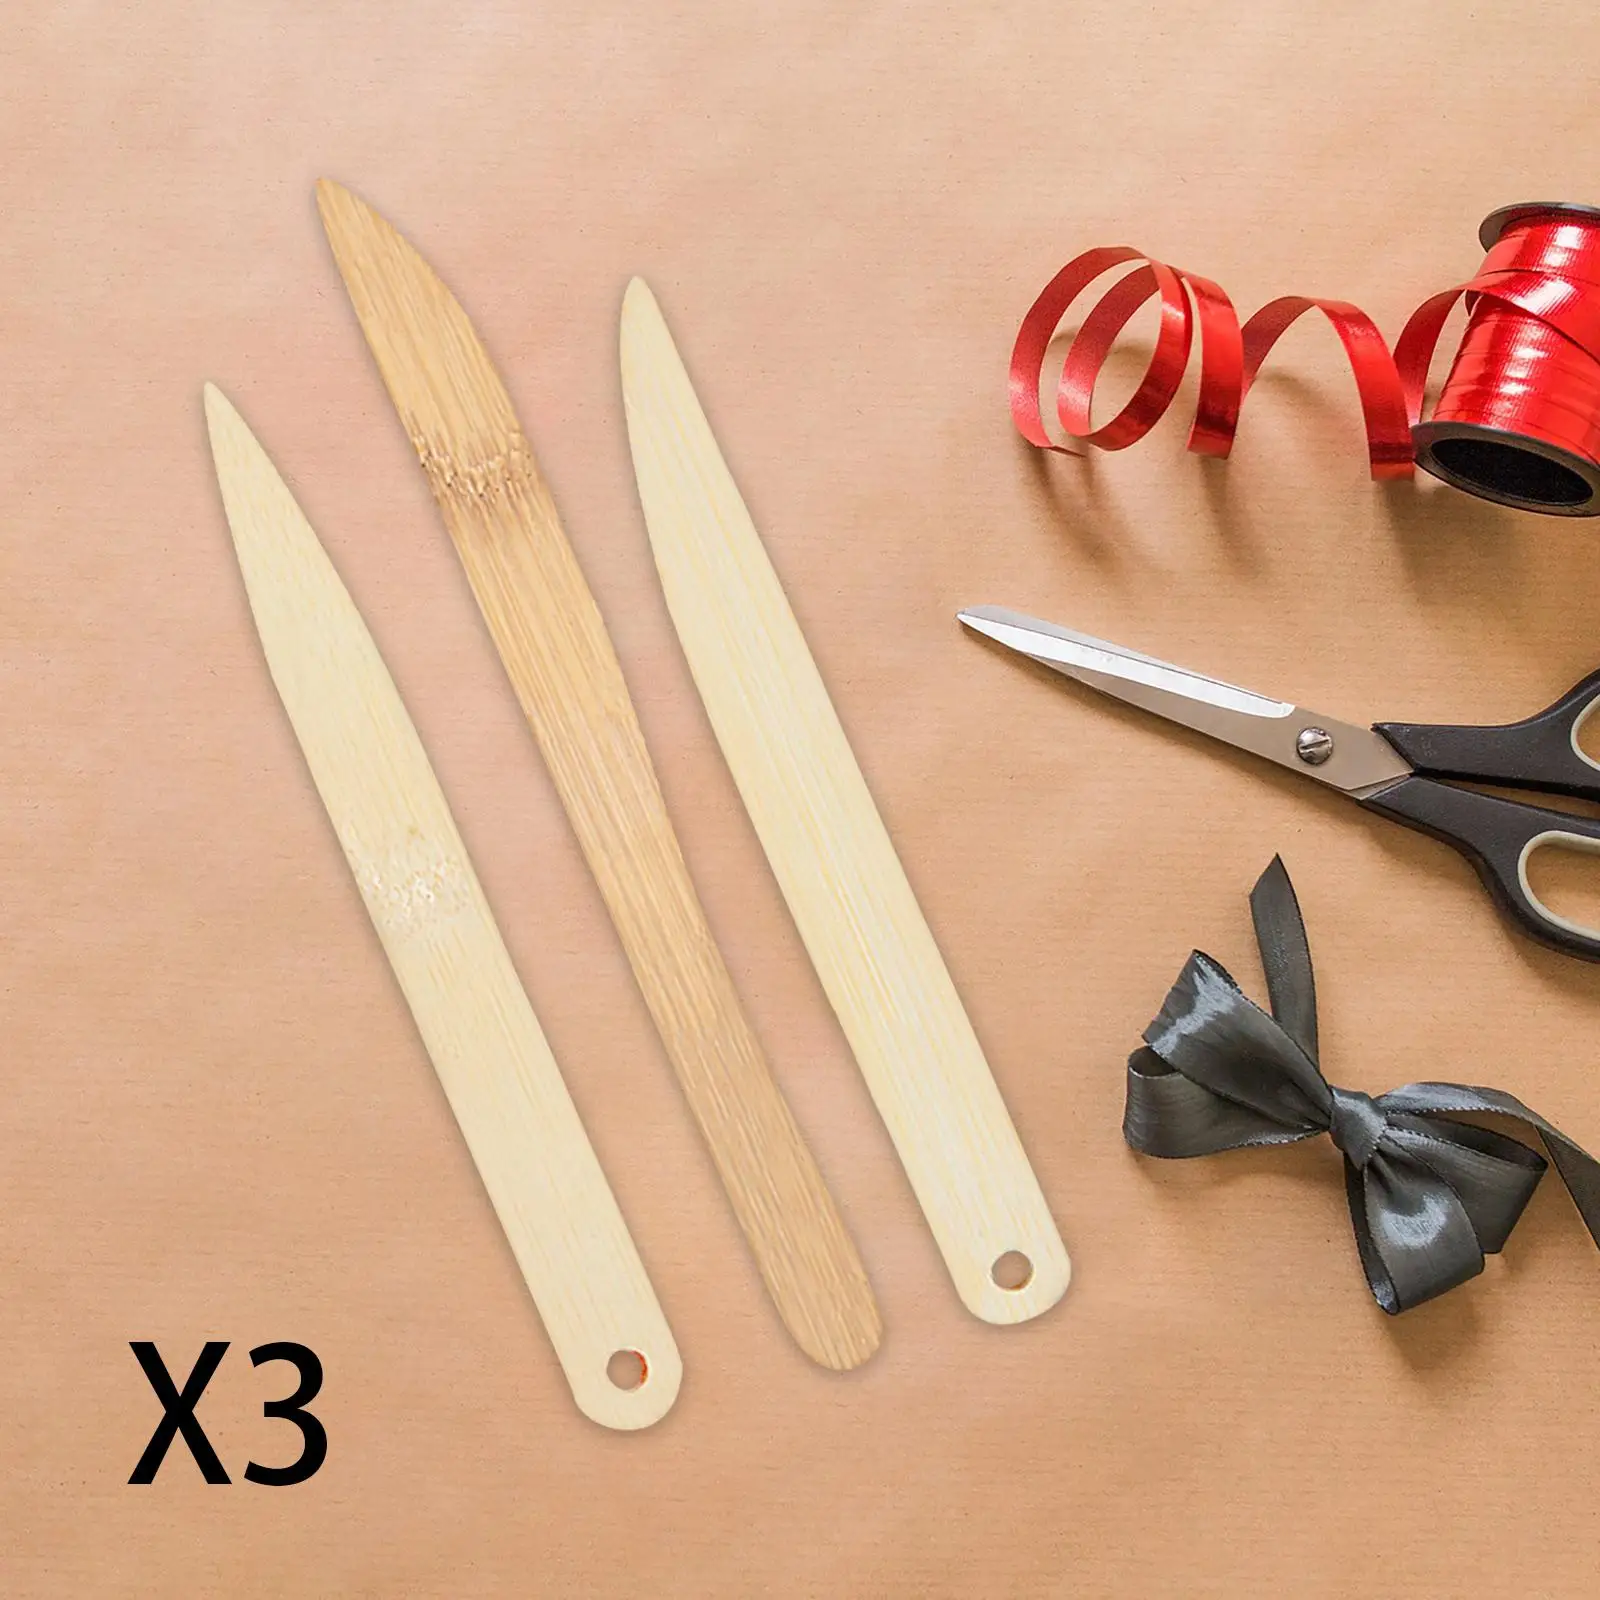 9x Envelope Slitter Making Paper Cutter Tools Calligraphy Paper Knife Xuan Paper Trimmer Lightweight Paper Knife Envelope Opener